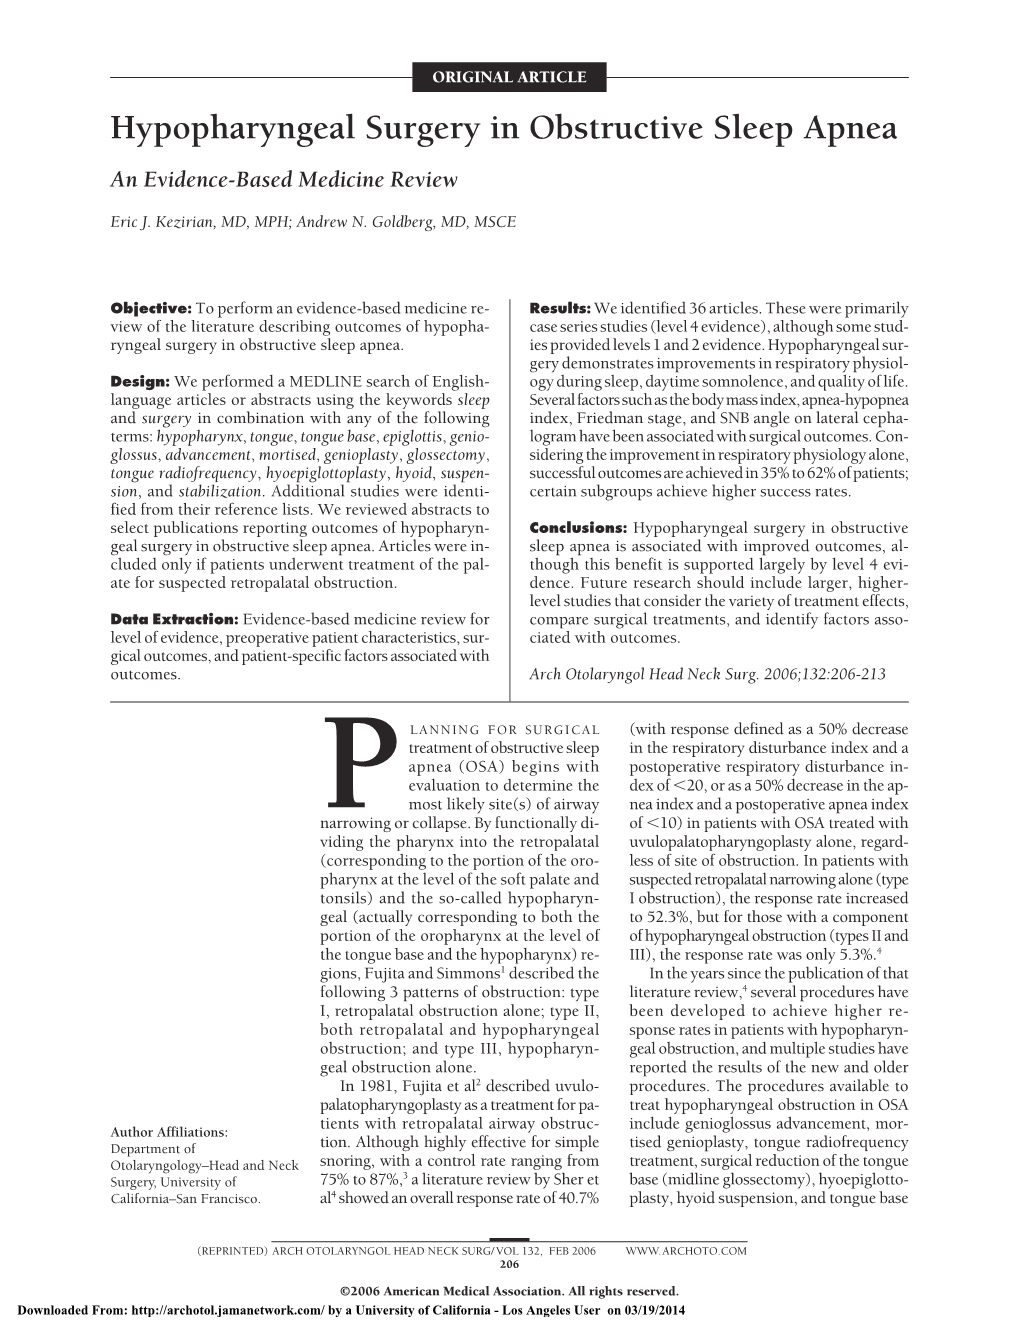 Hypopharyngeal Surgery in Obstructive Sleep Apnea an Evidence-Based Medicine Review